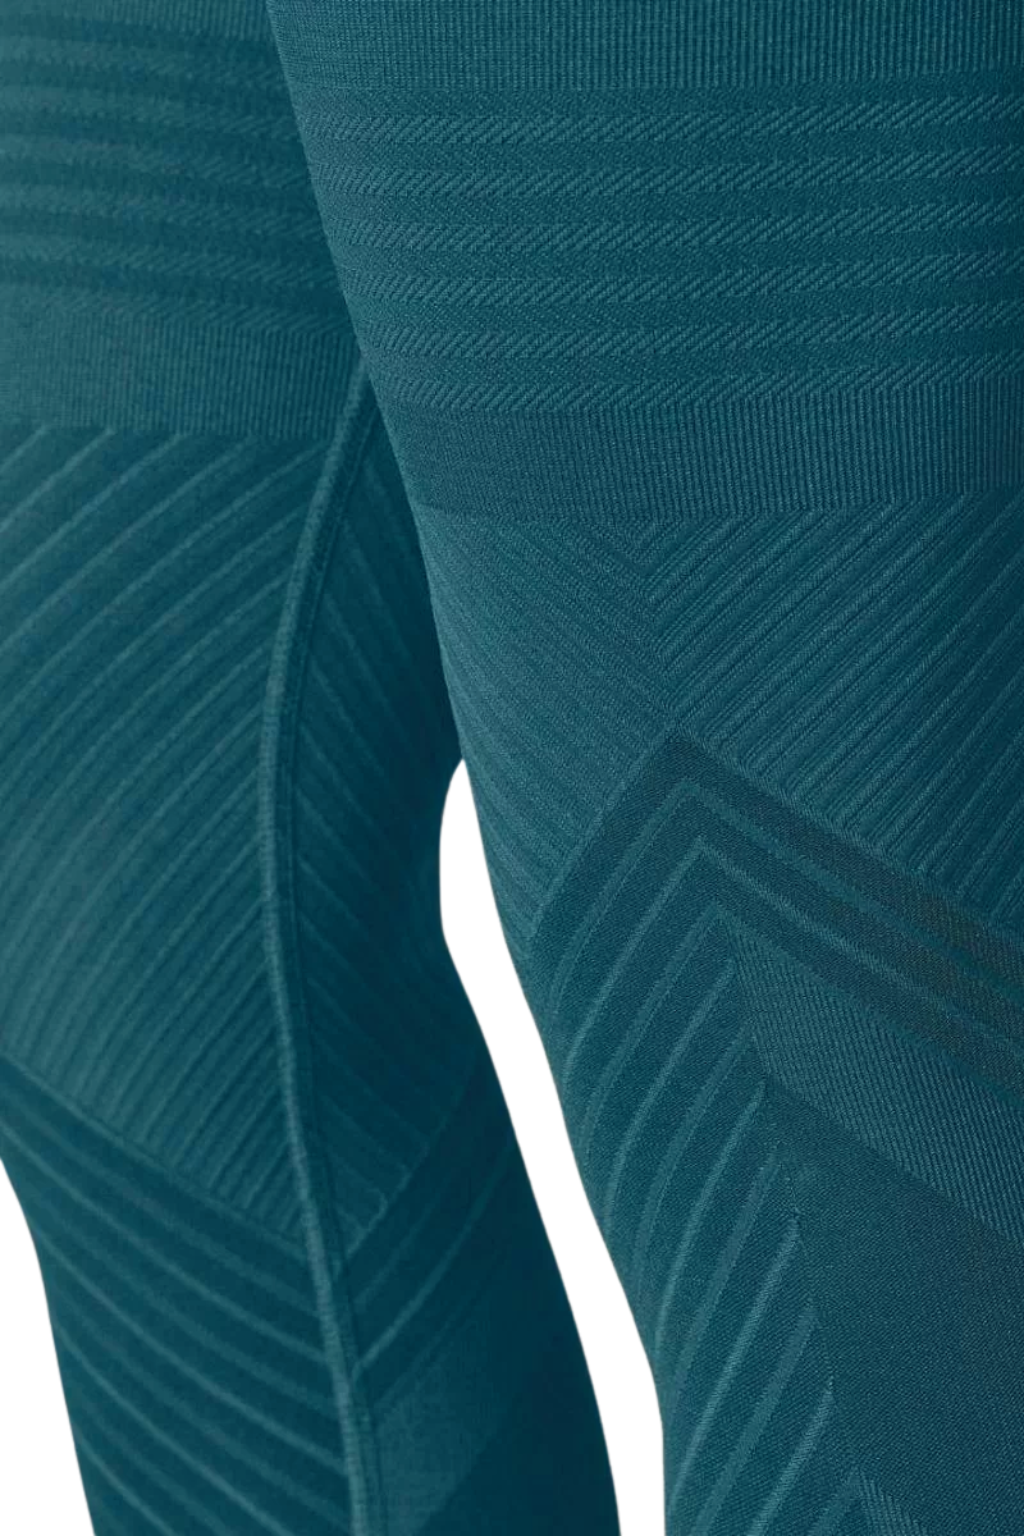 Lupo New Strong Ribbed Sport Legging Fitness Pants - METRO BRAZIL